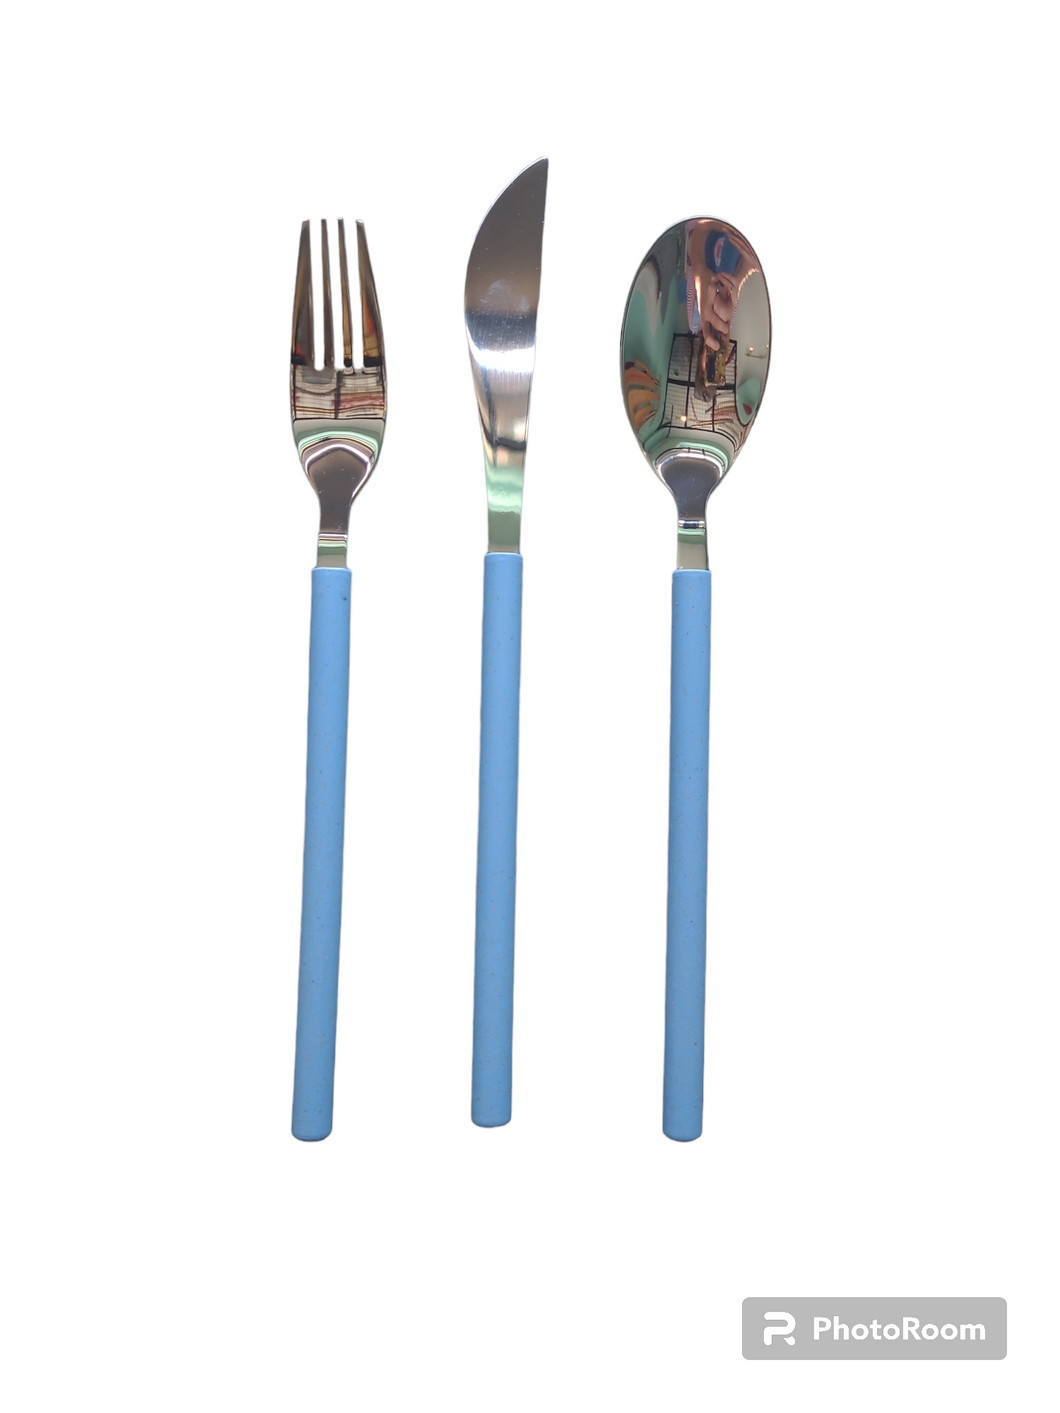 Blue Handle Cutlery Set